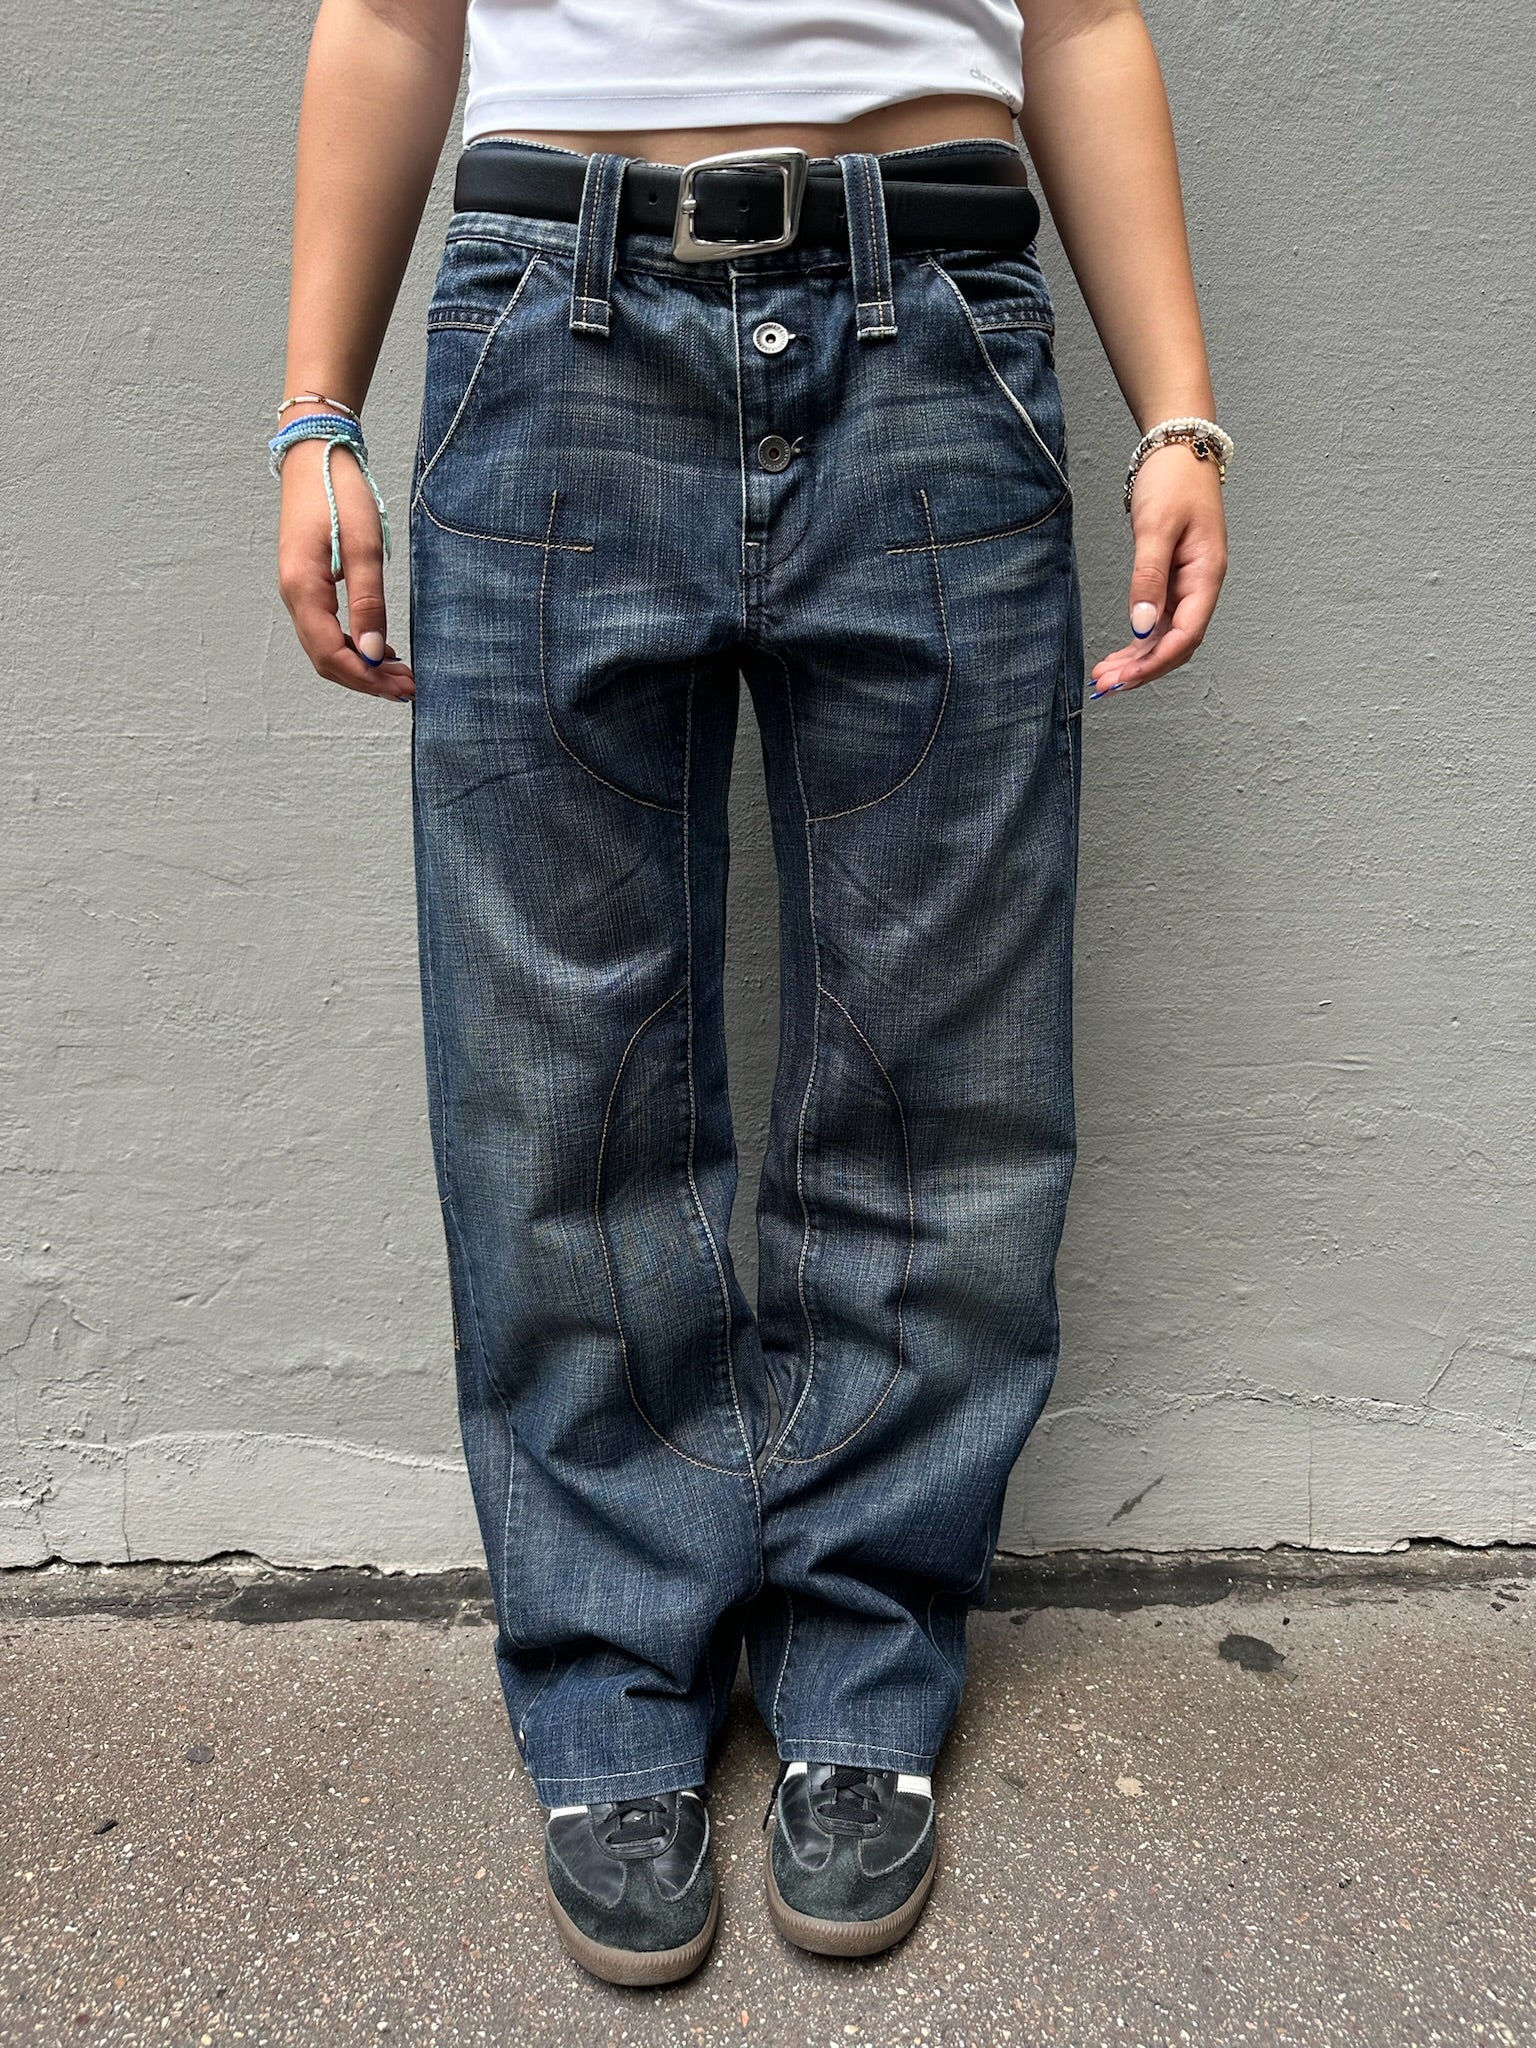 Tragebild Vintage Baggy Low waist Jeans s/m vor grauer wand